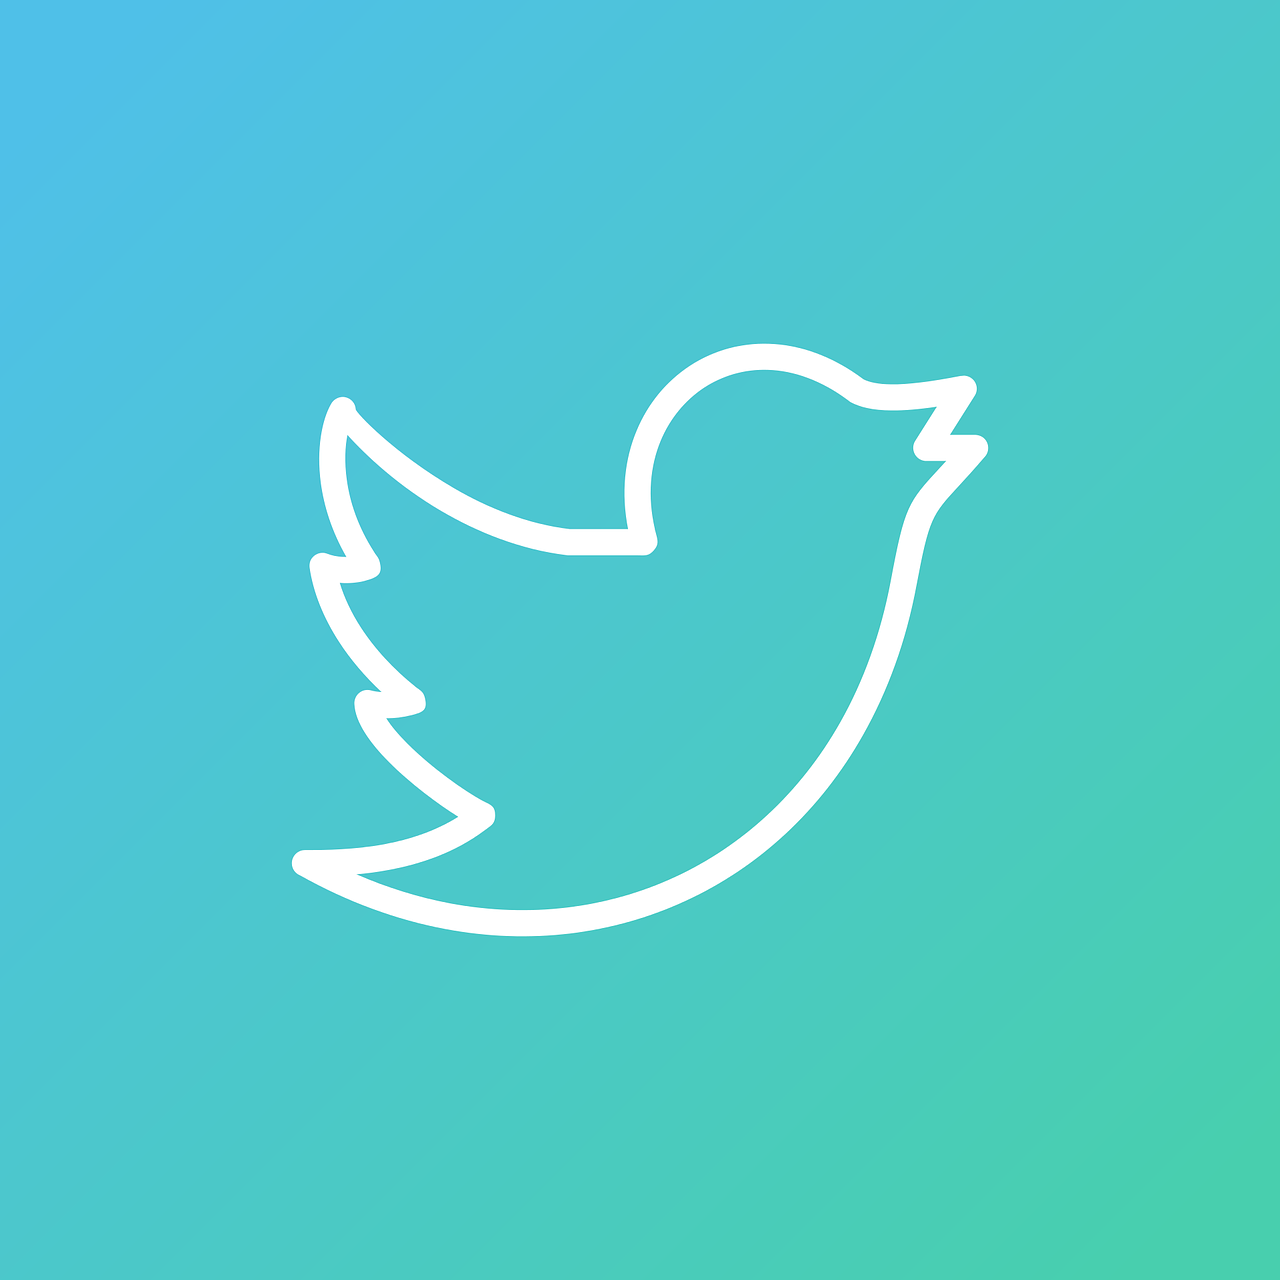 Download Free Photo Of Twitter Tweet Twitter Icon Twitter Logo Twitter Symbol From Needpix Com